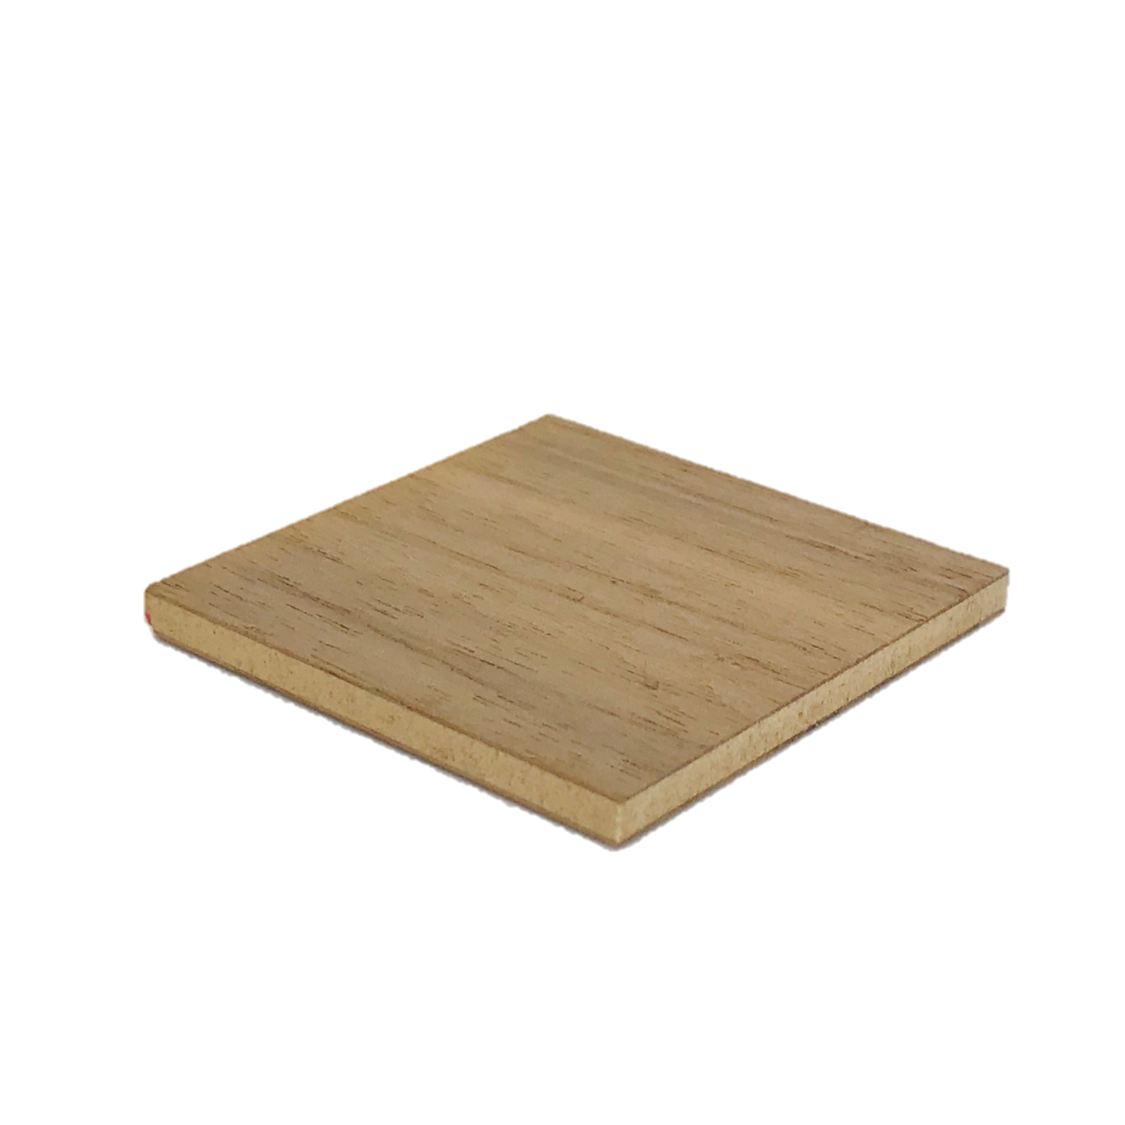 6PCS Wood Veneer Sheet Walnut Plywood Sheets, 16.5 x 11.8 Inch Walnut Wood  3MM/1/8Inch Thin Unfinished Wood Veneer Sheet for Laser Cutting, Painting